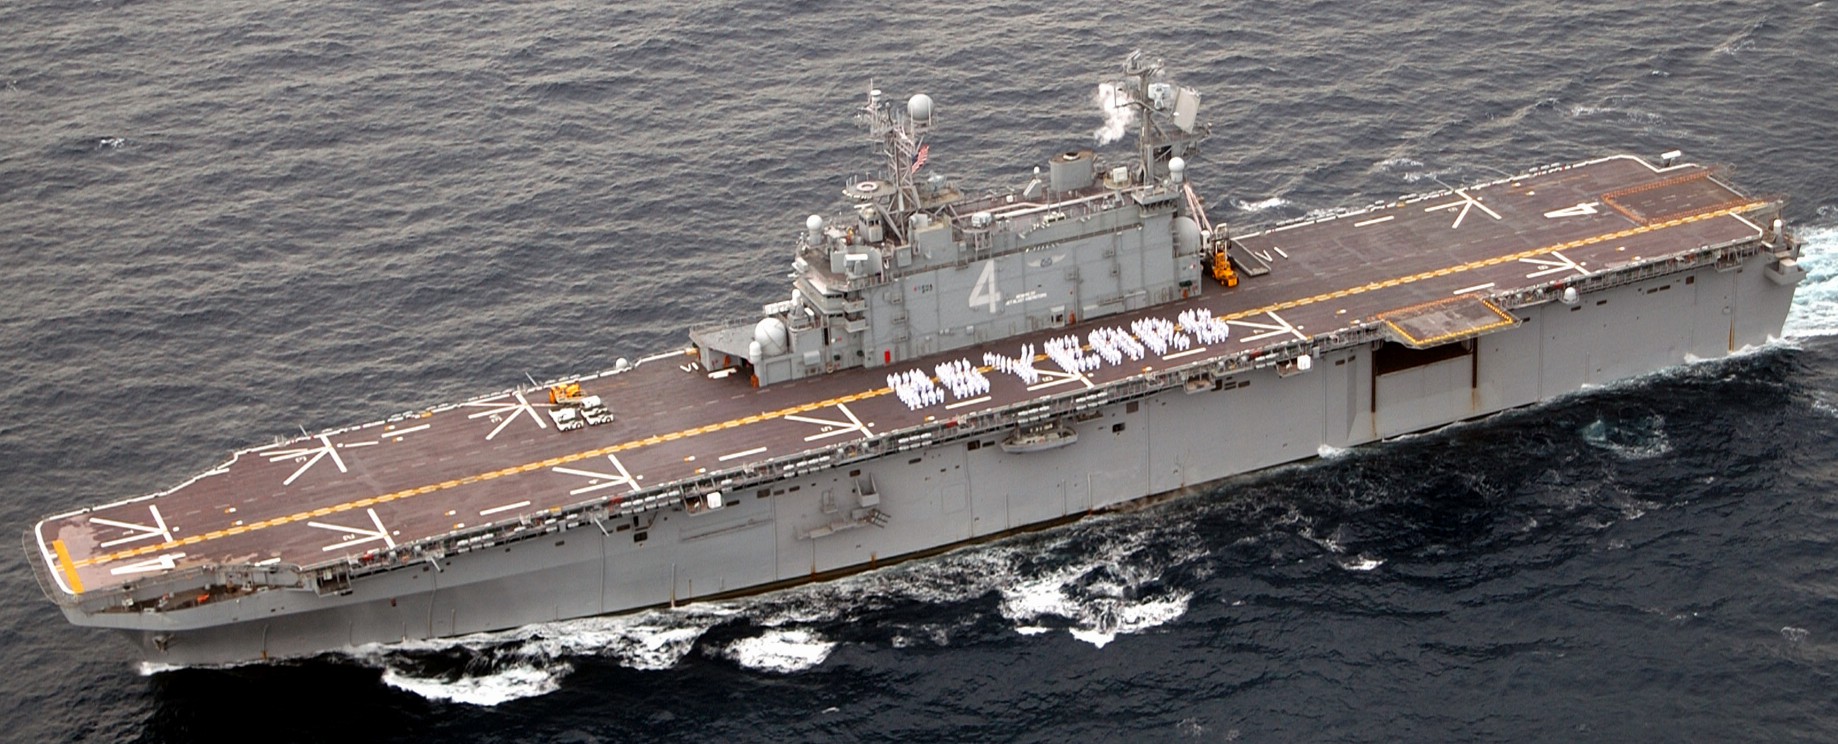 lha-4 uss nassau tarawa class amphibious assault ship us navy 08